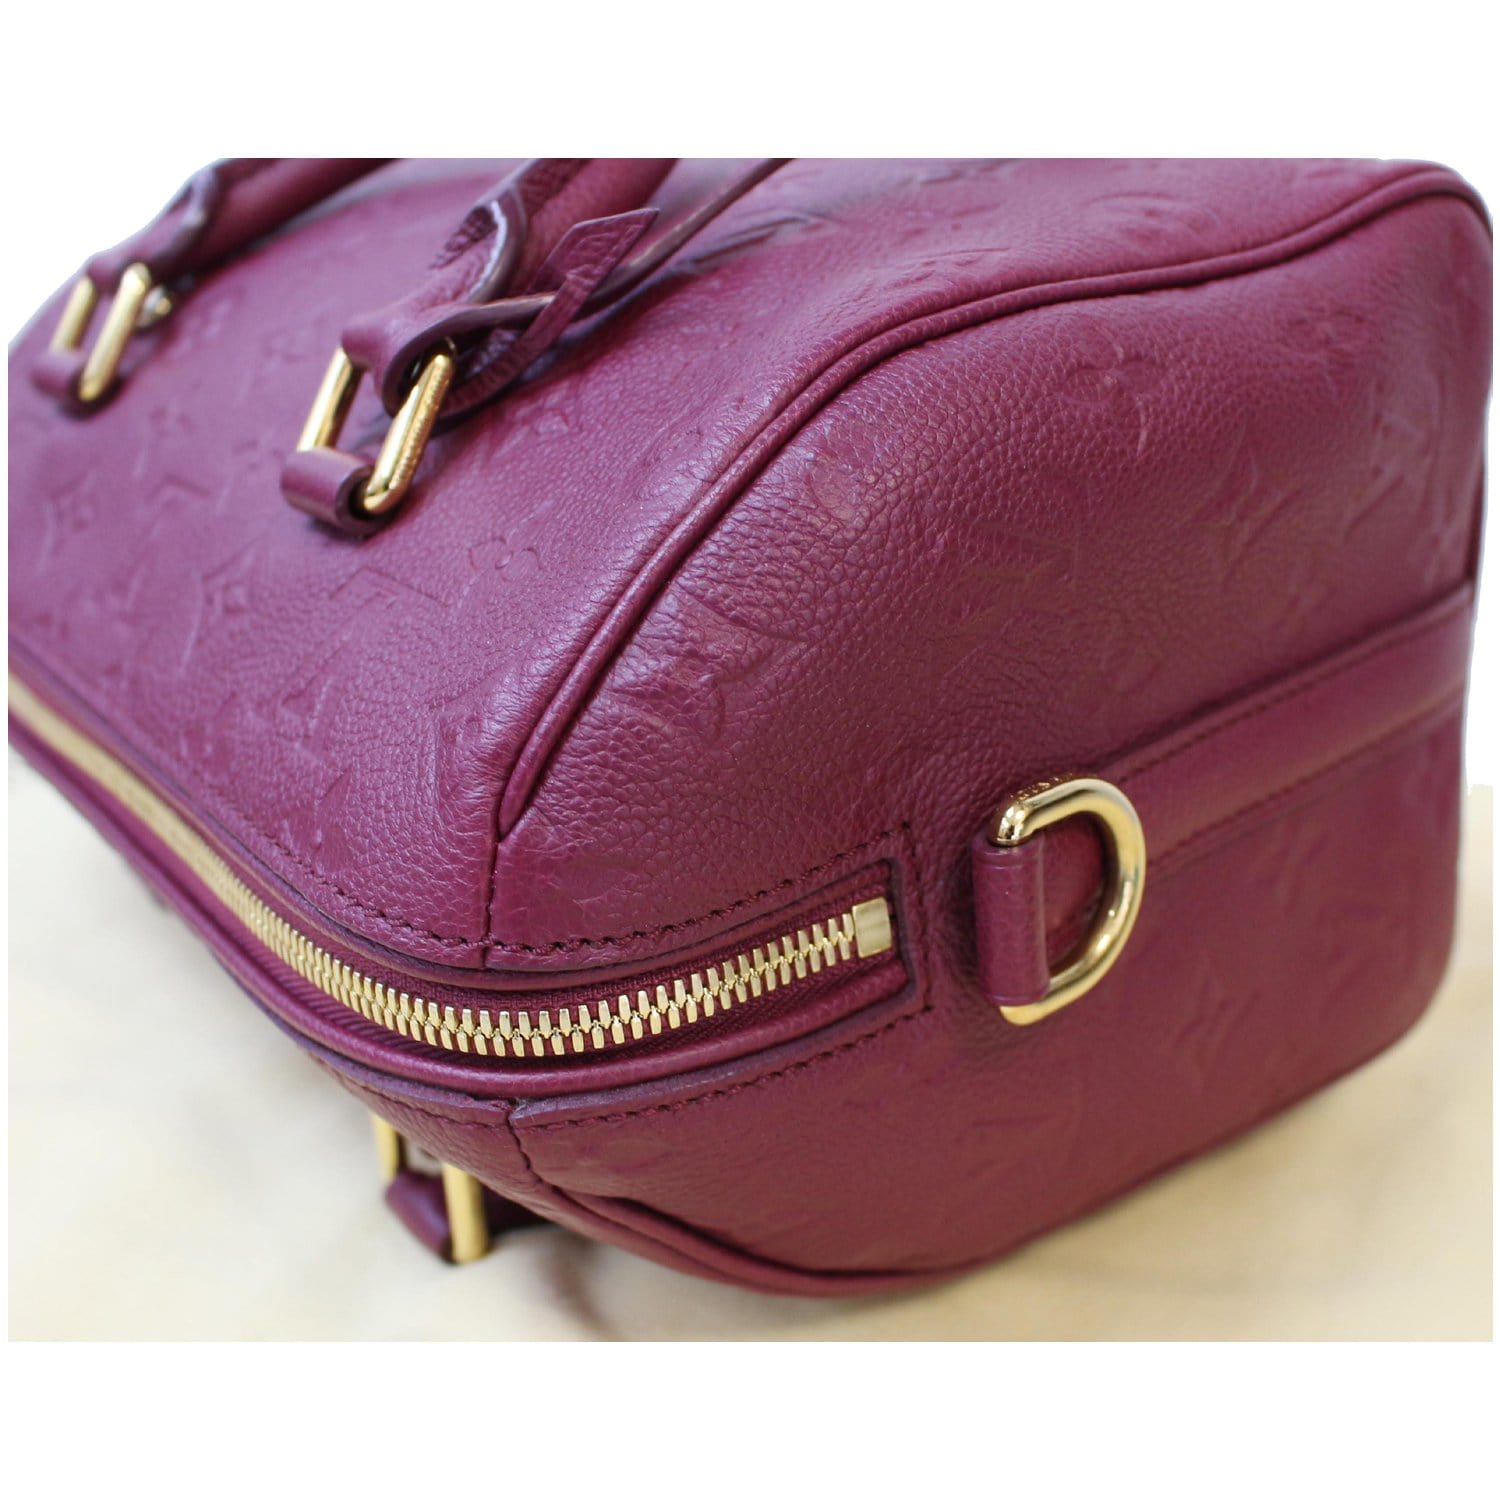 Louis Vuitton Speedy Bandouliere 25 in Brown Empreinte Leather Handbag - Authentic Pre-Owned Designer Handbags